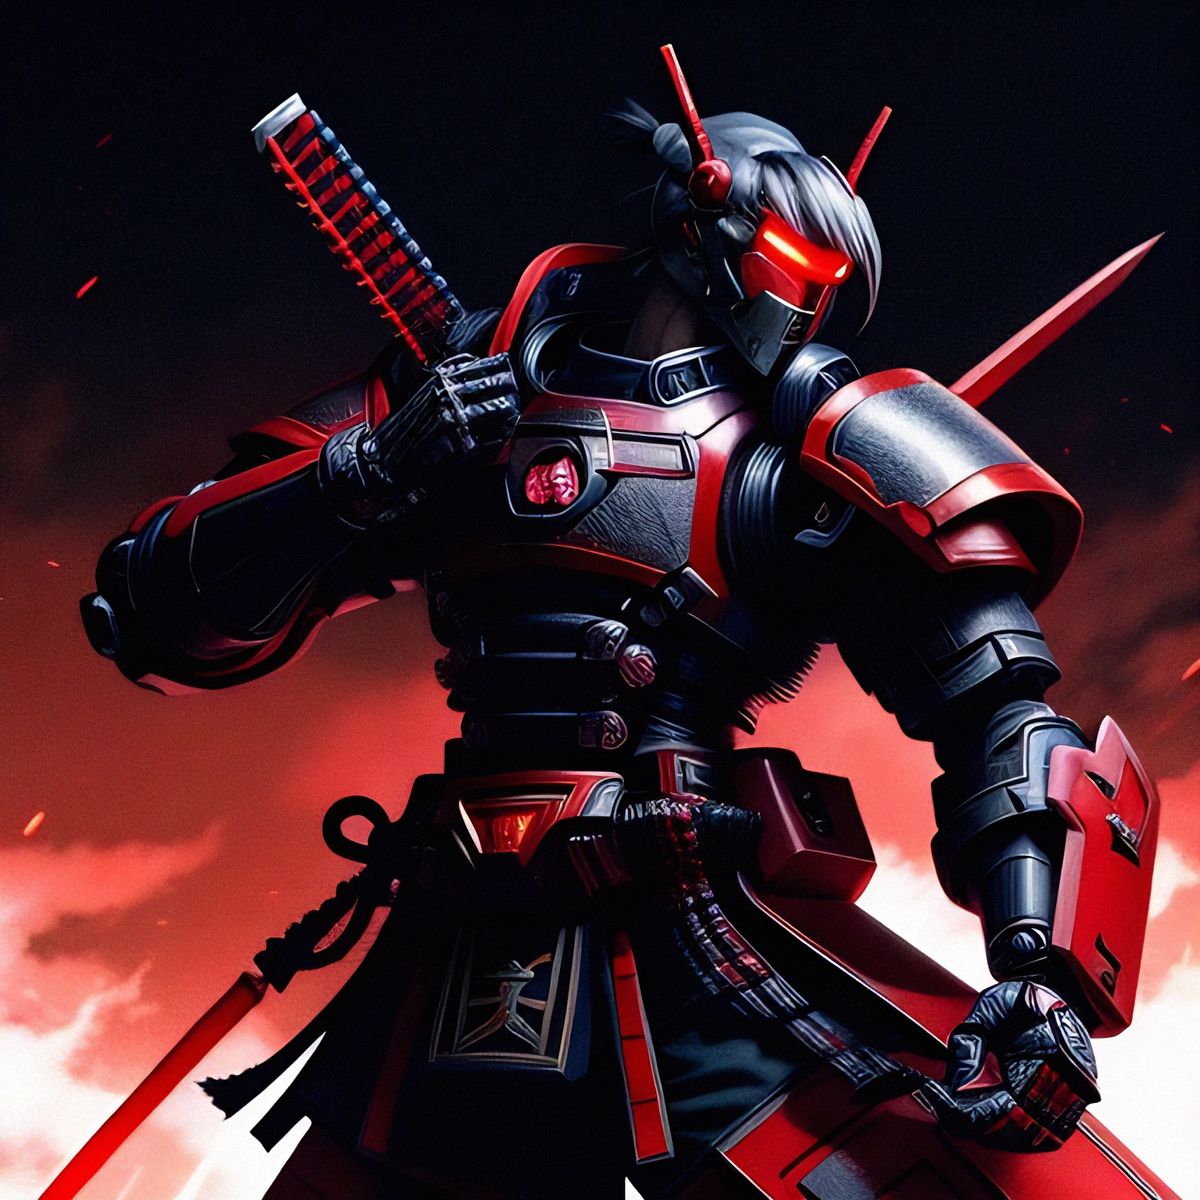 A samurai styled cyber warrior